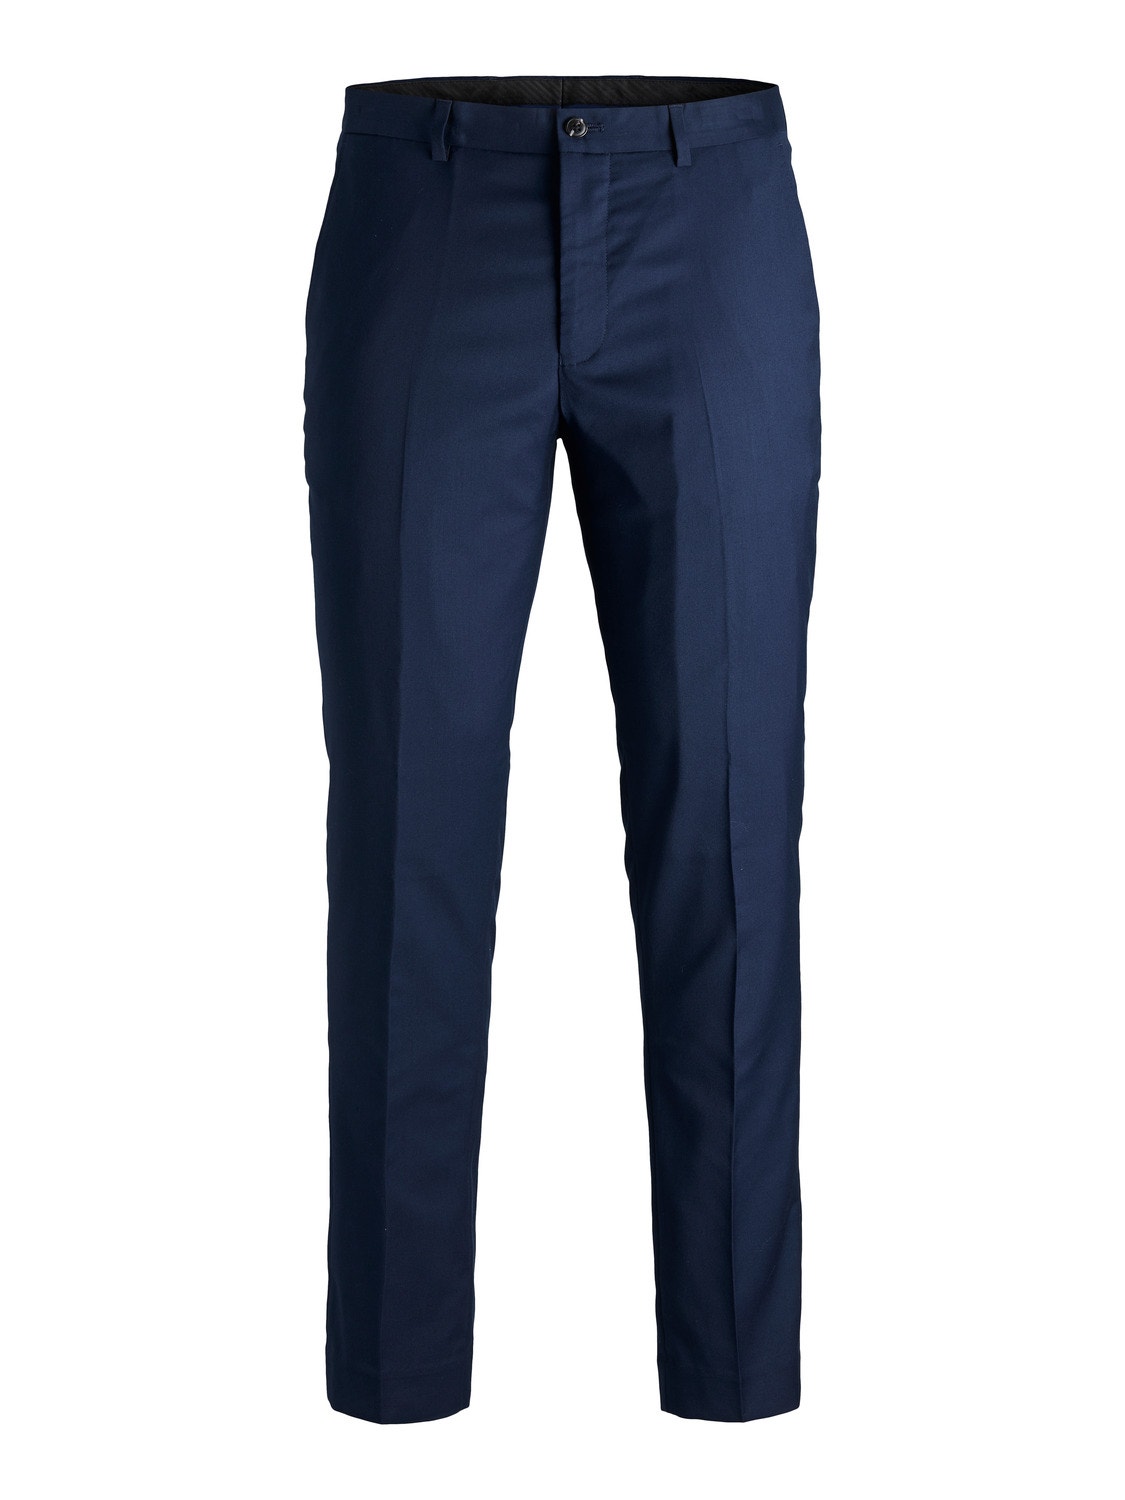 Jack & Jones Plus Size Slim Fit Pantalon -Dark Navy - 12202684